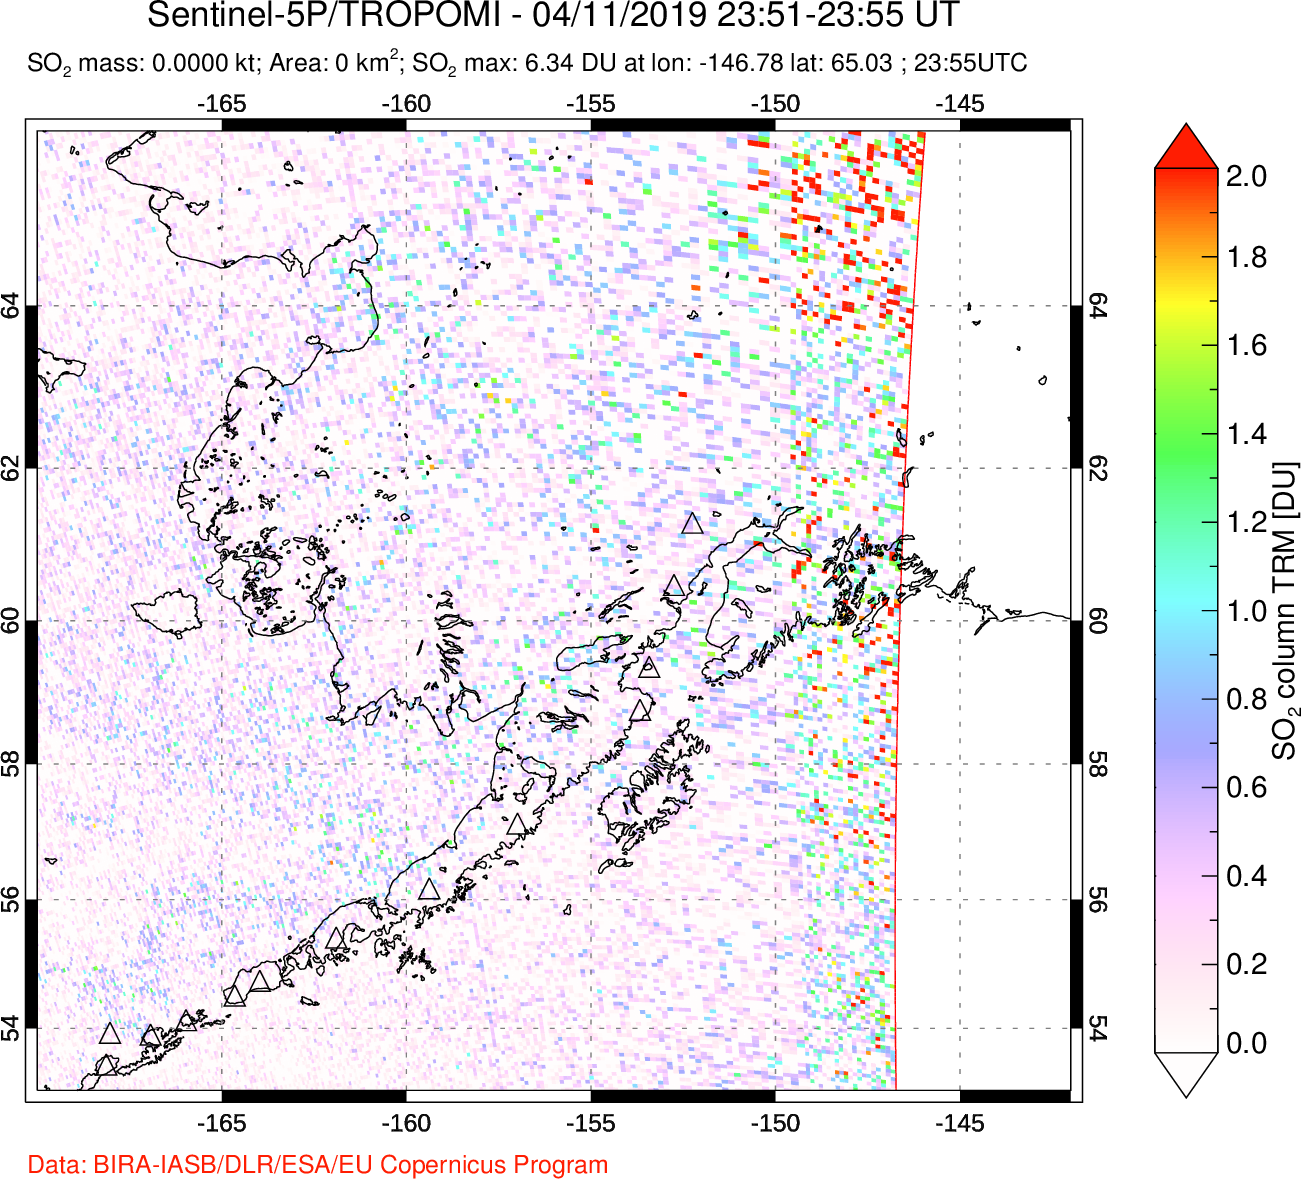 A sulfur dioxide image over Alaska, USA on Apr 11, 2019.